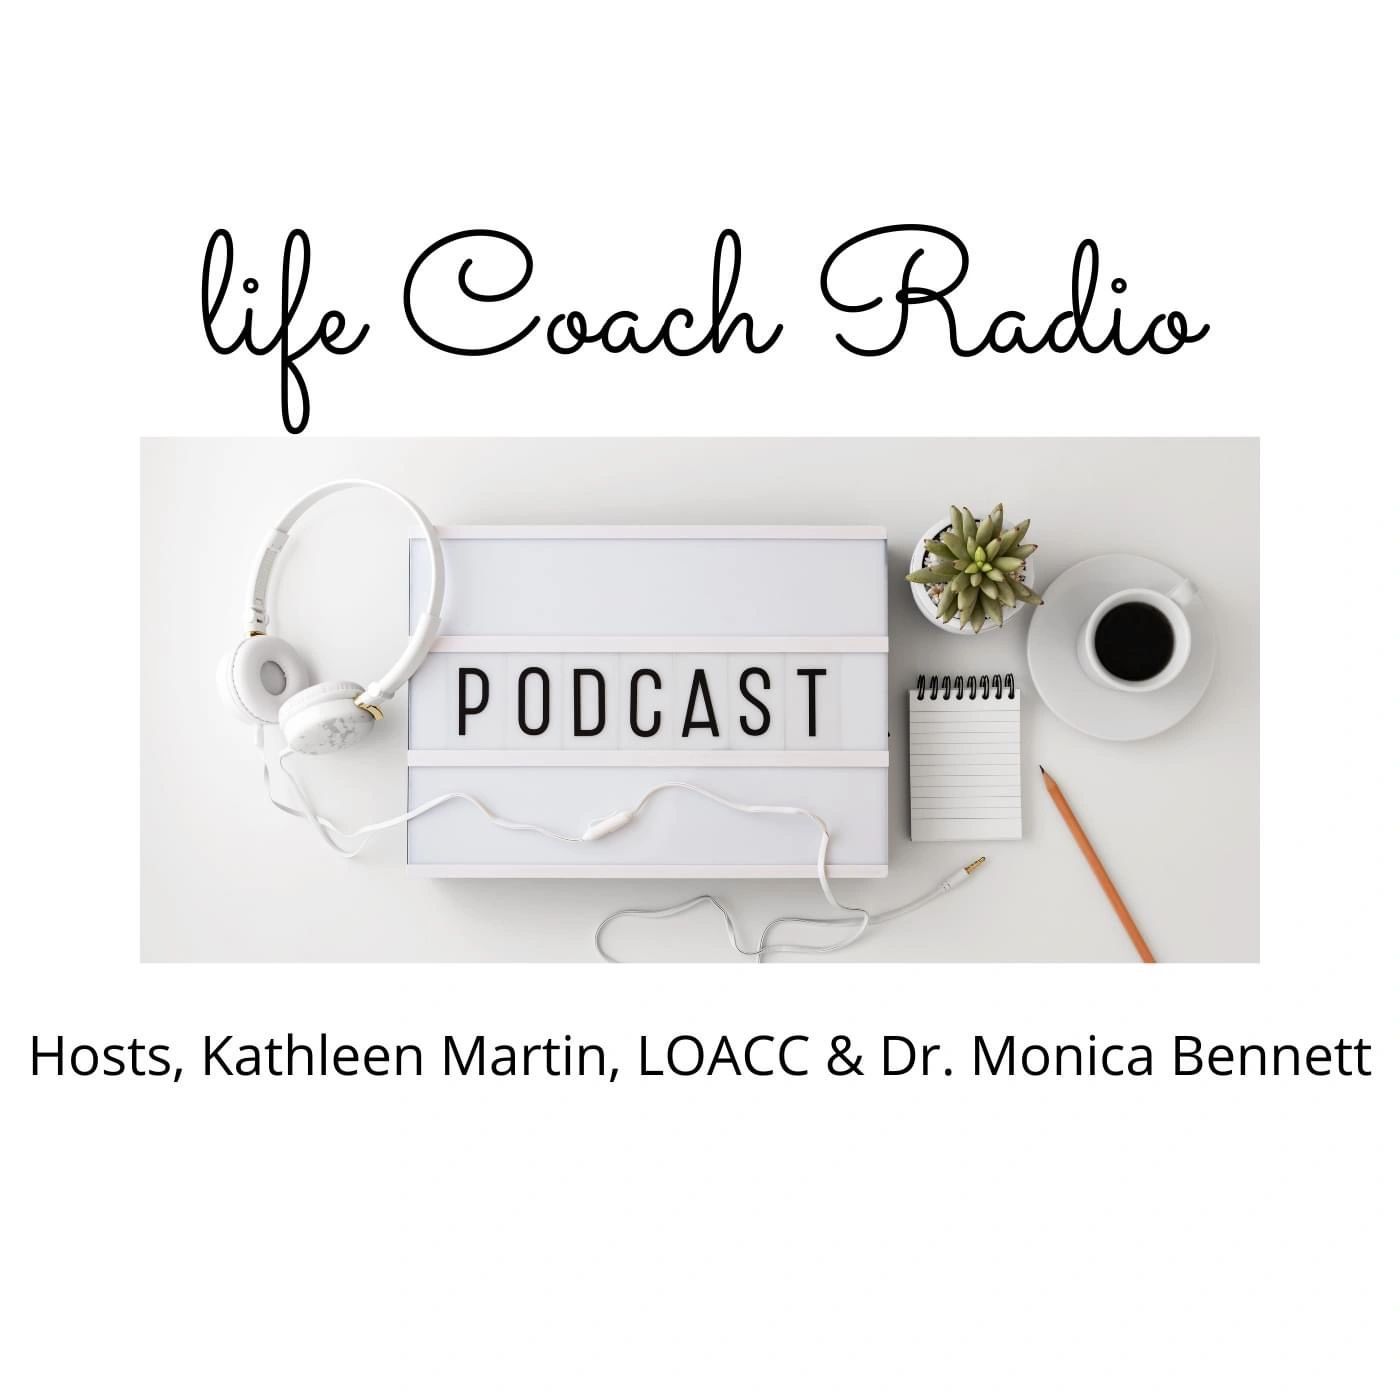 Life coach radio